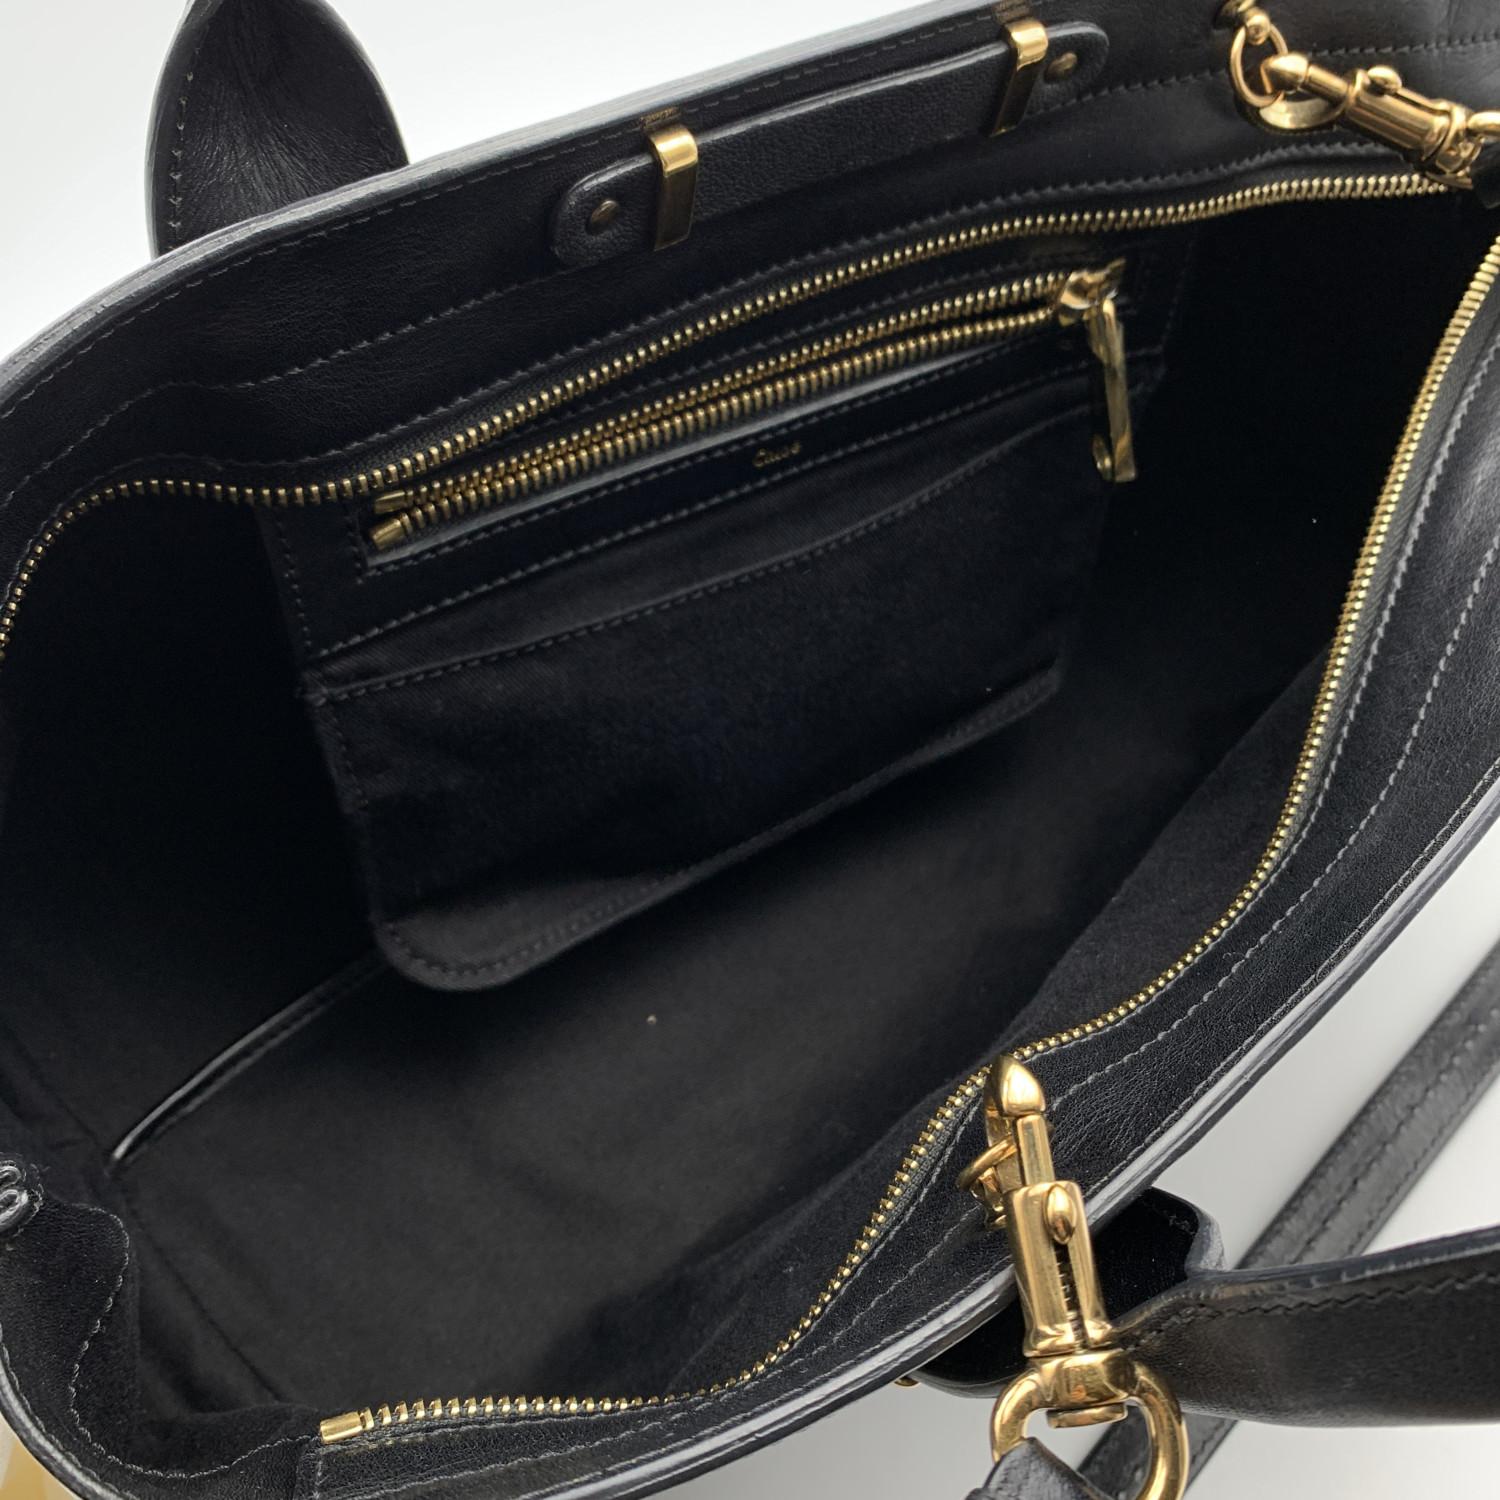 Women's Chloe Black Leather Alice Bag Satchel Handbag with Strap